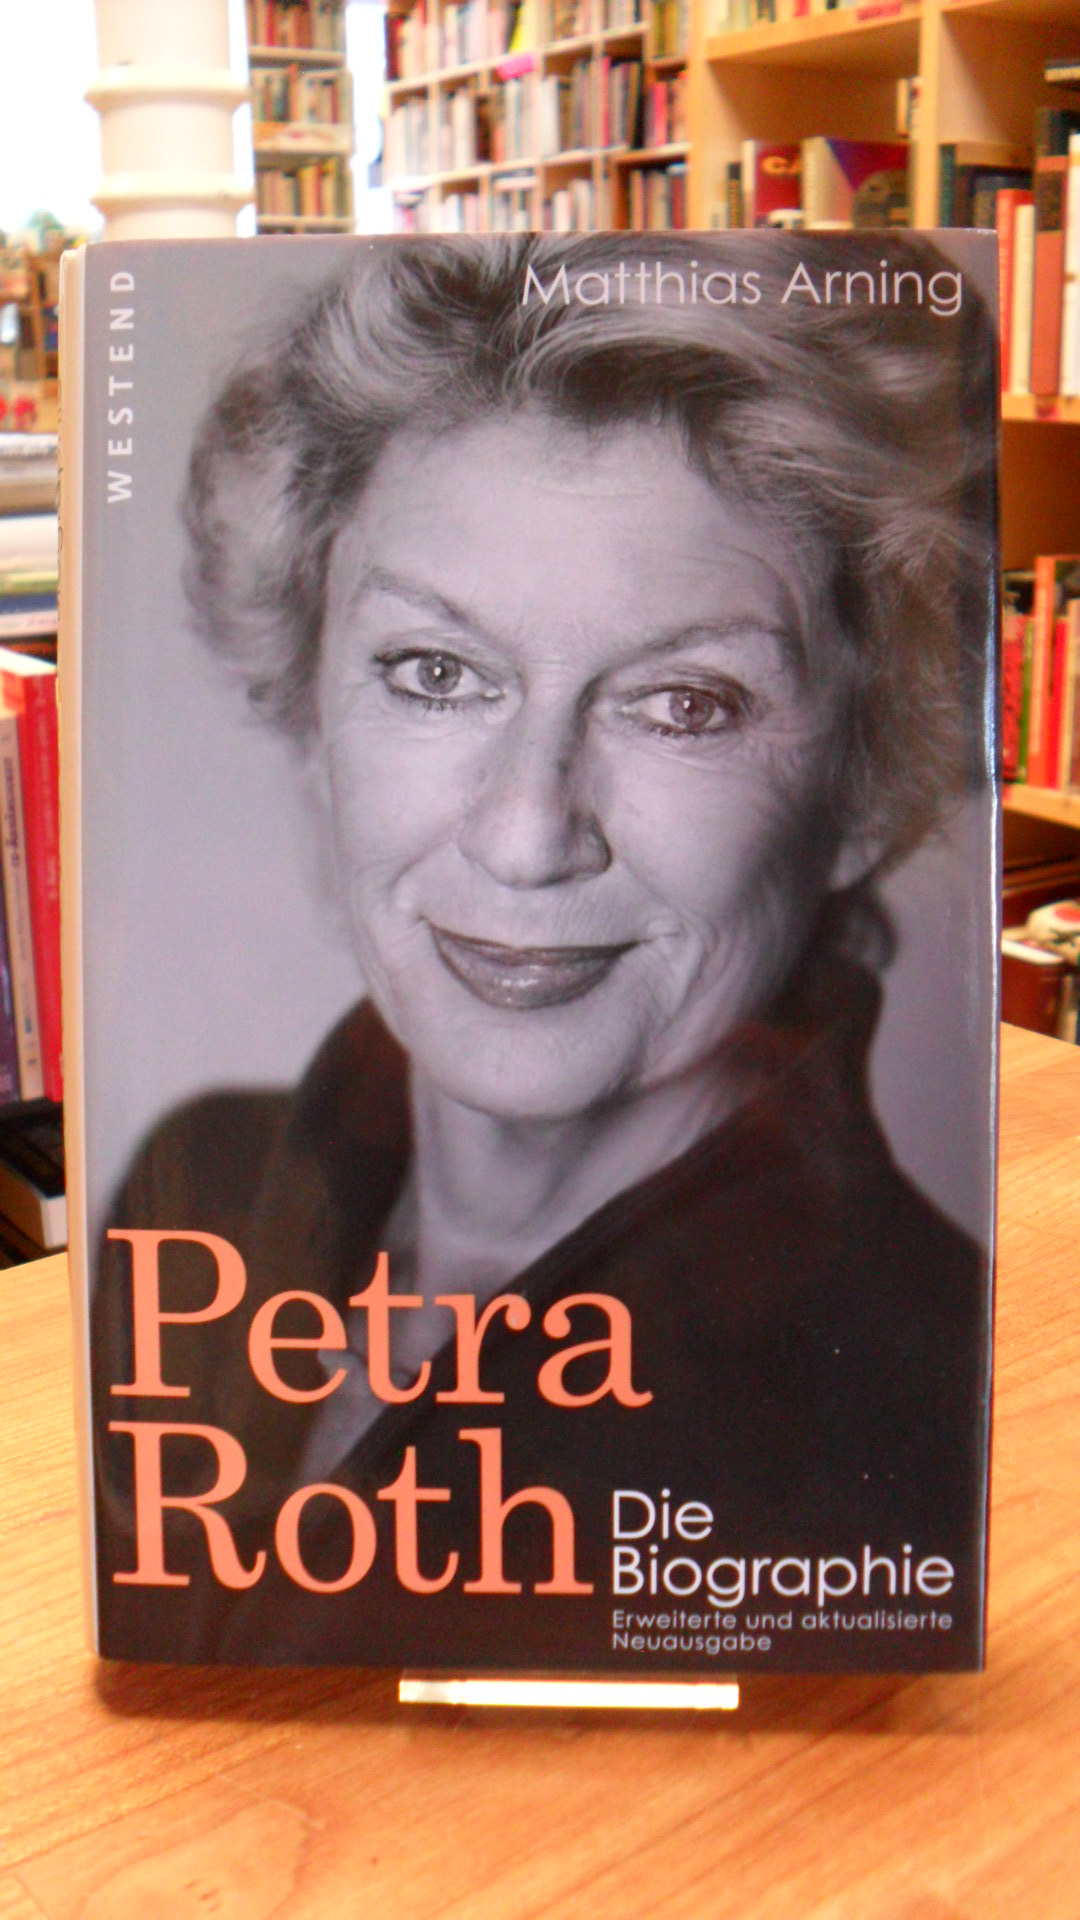 Arning, Petra Roth – Die Biographie,